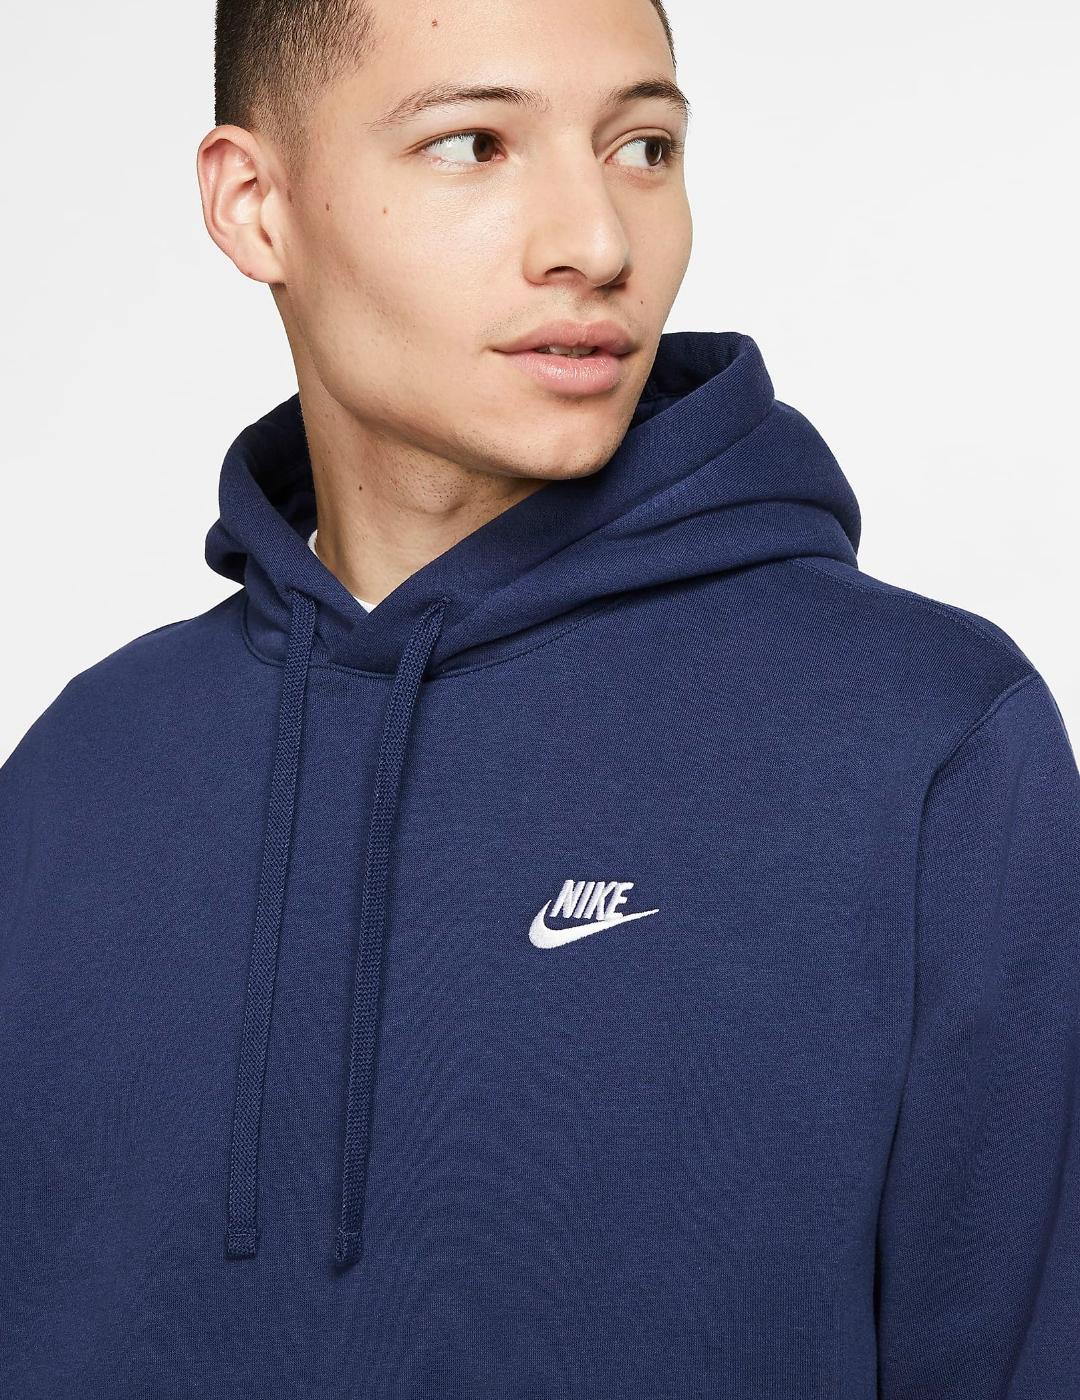 Sudadera Nike con Capucha Azul Marino Hombre